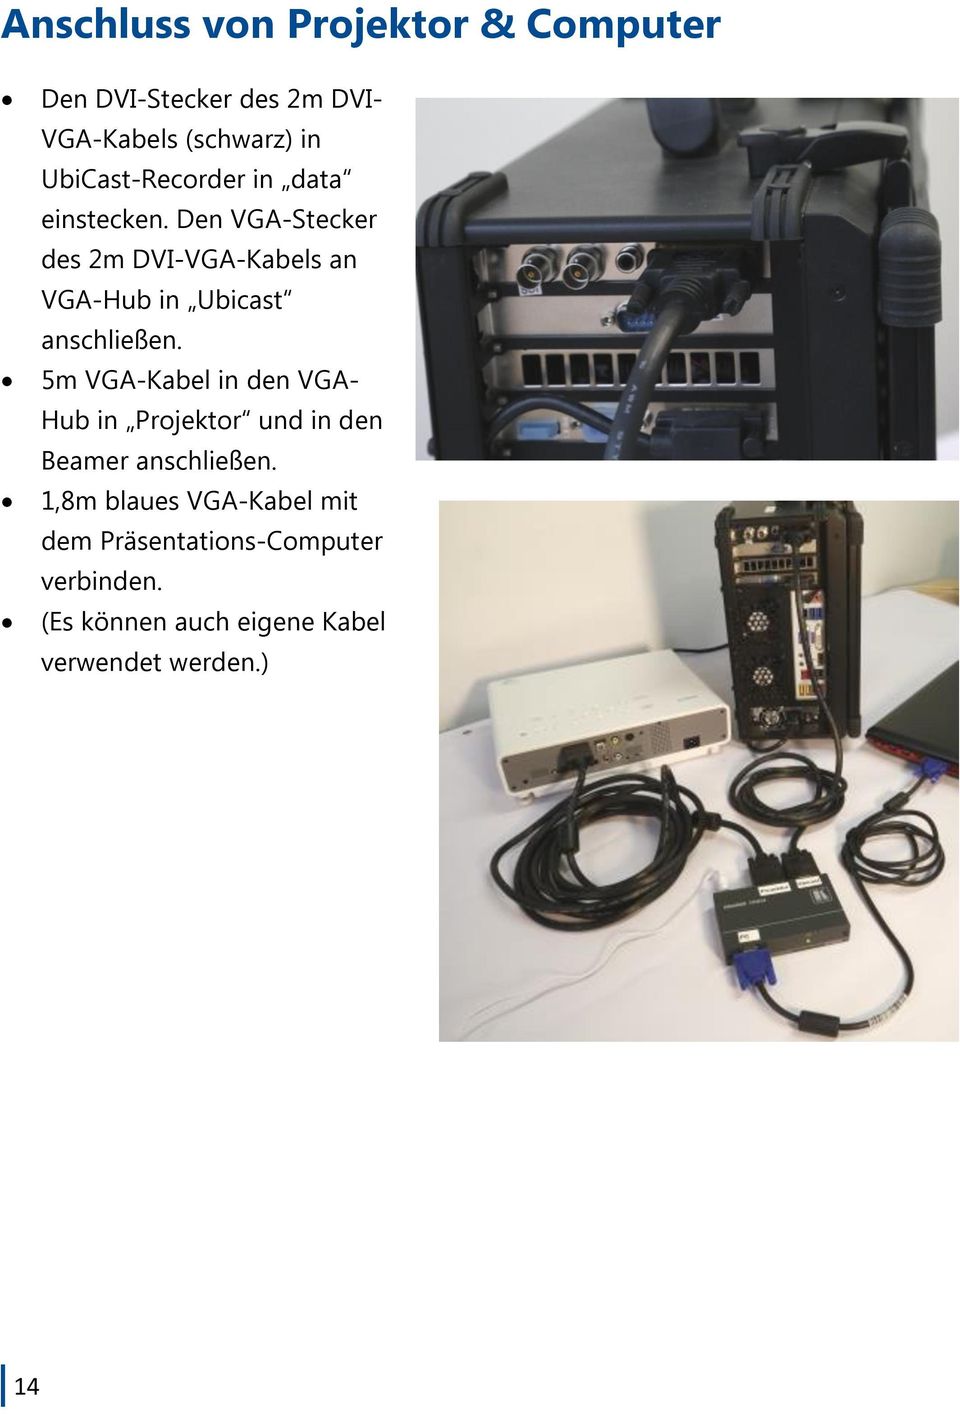 Den VGA-Stecker des 2m DVI-VGA-Kabels an VGA-Hub in Ubicast anschließen.